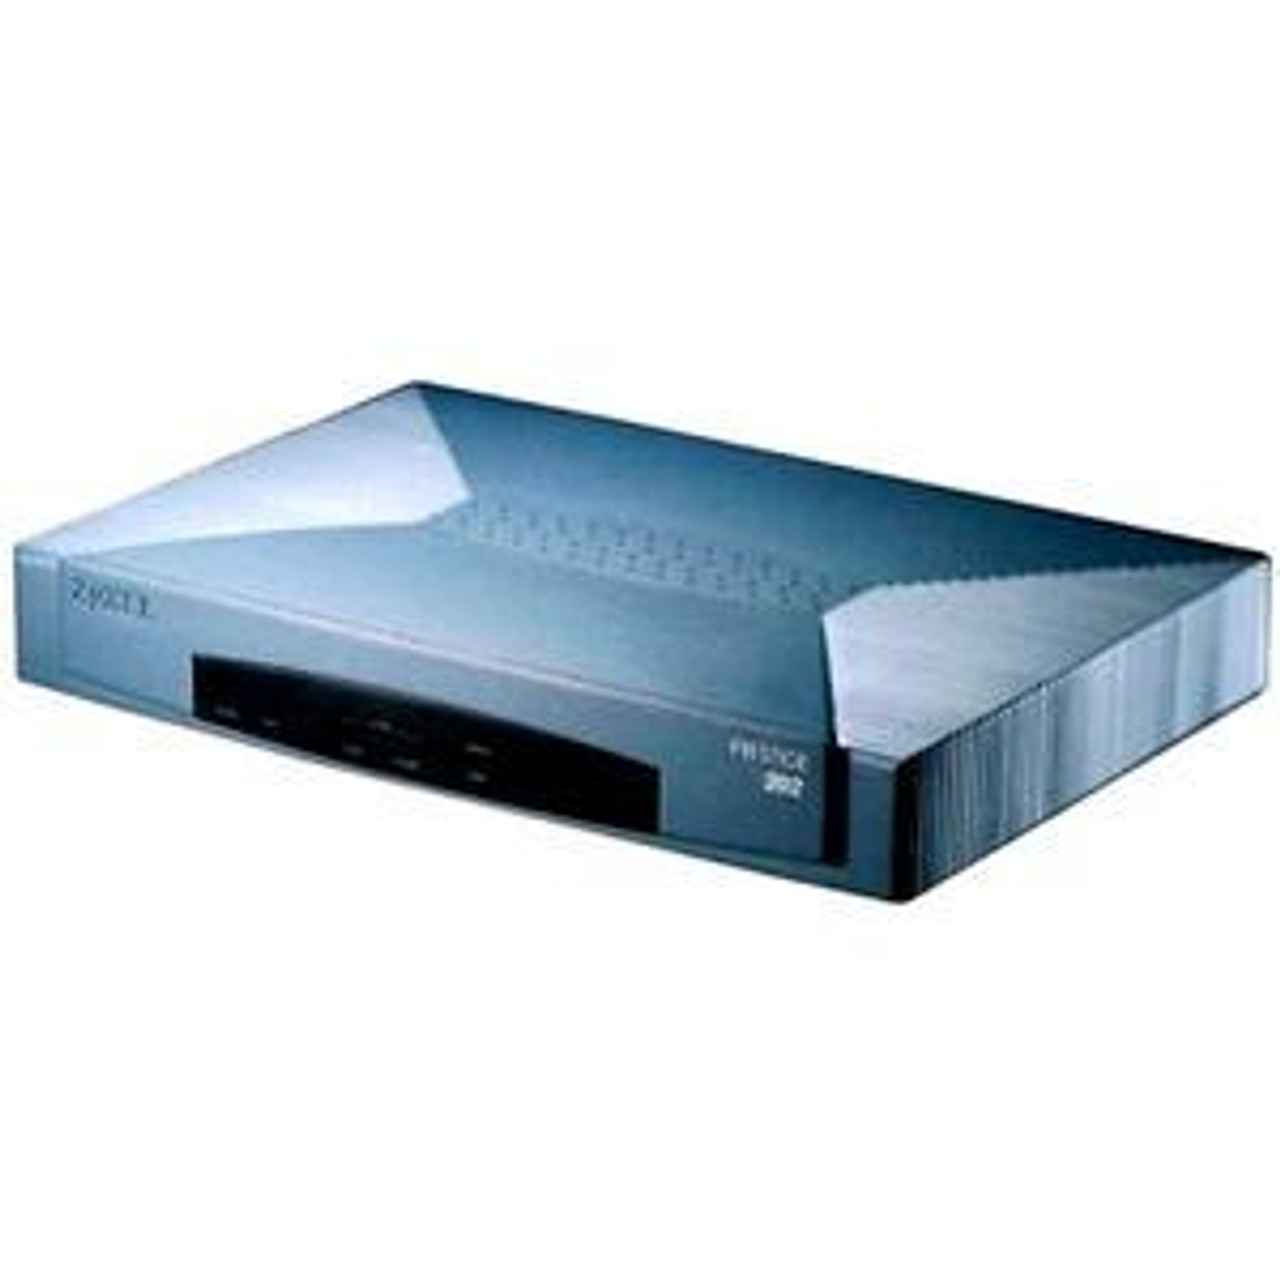 AM405600 Zyxel Prestige 202 ISDN Router 1 x ISDN BRI WAN, 1 x 10/100Base-TX LAN, 2 x (Refurbished)